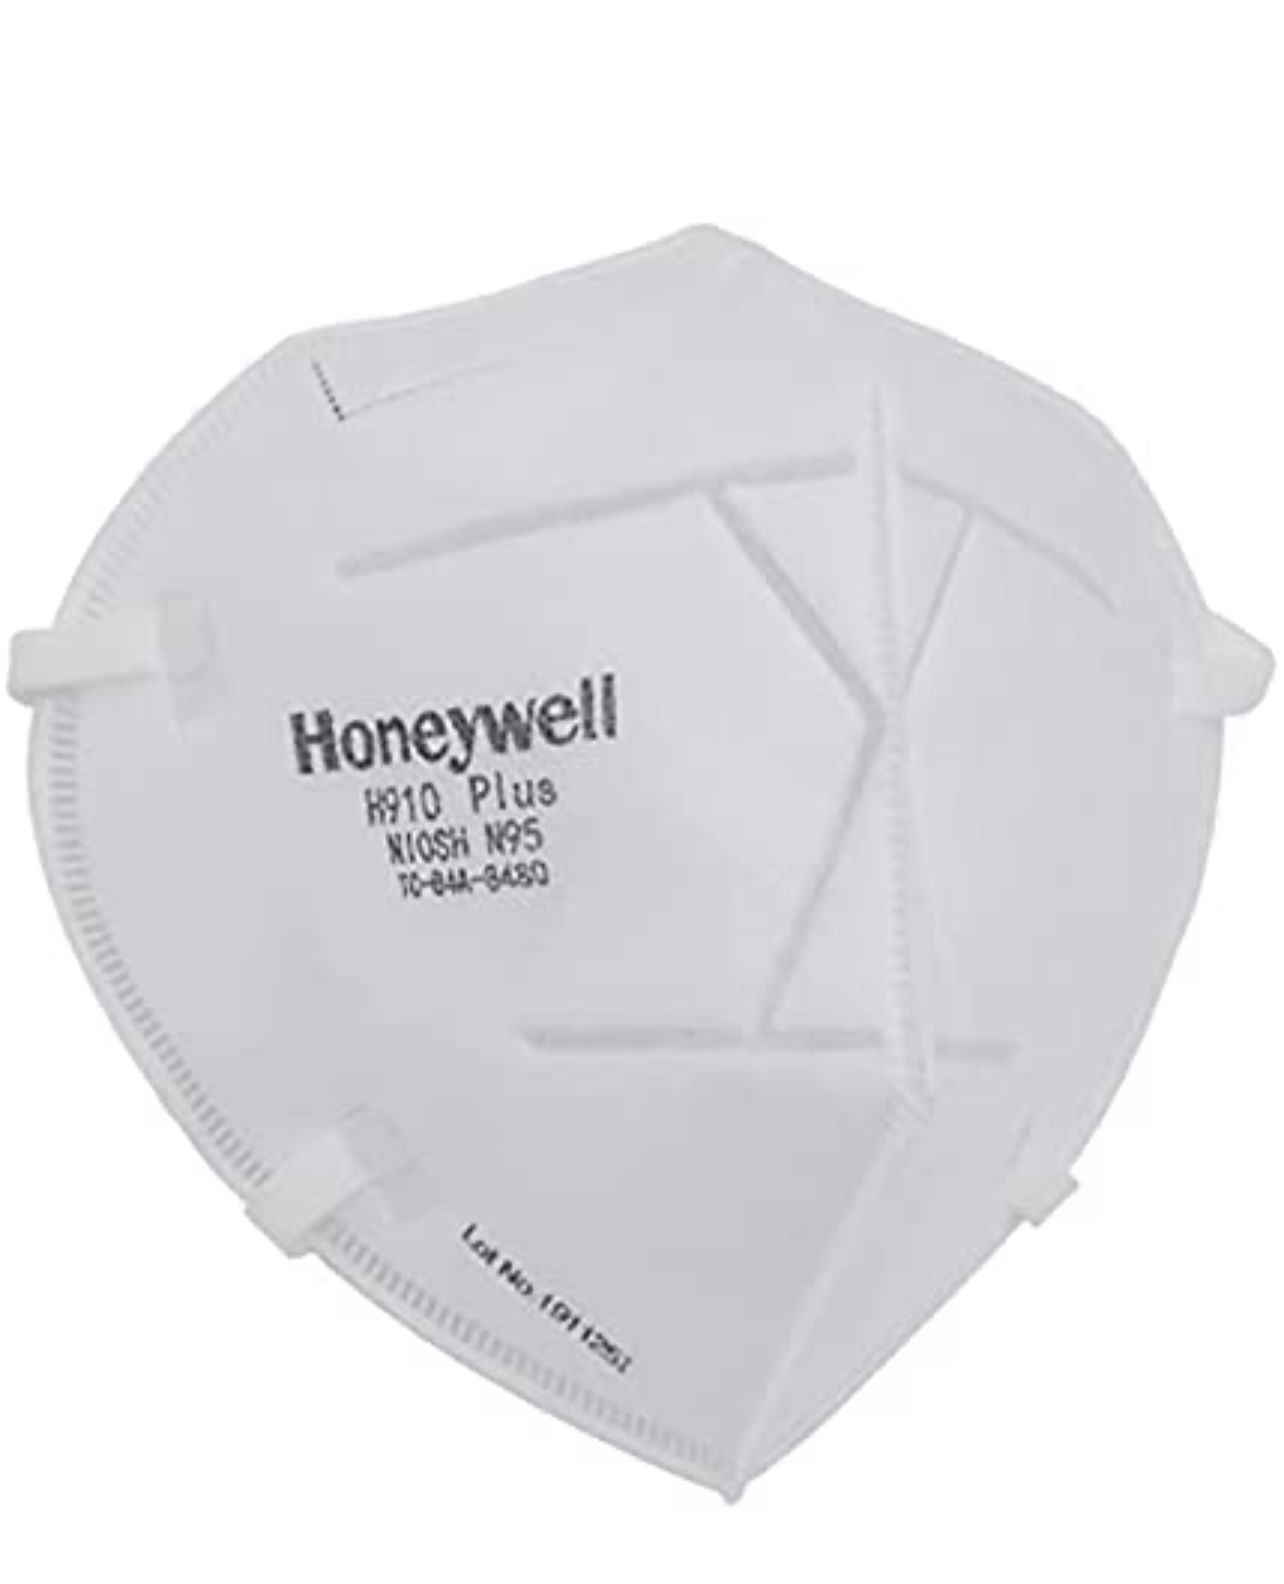 50-Count Honeywell DF300 H910P NIOSH N95 Masks Disposable Respirator, in stock, $37.16 at Amazon